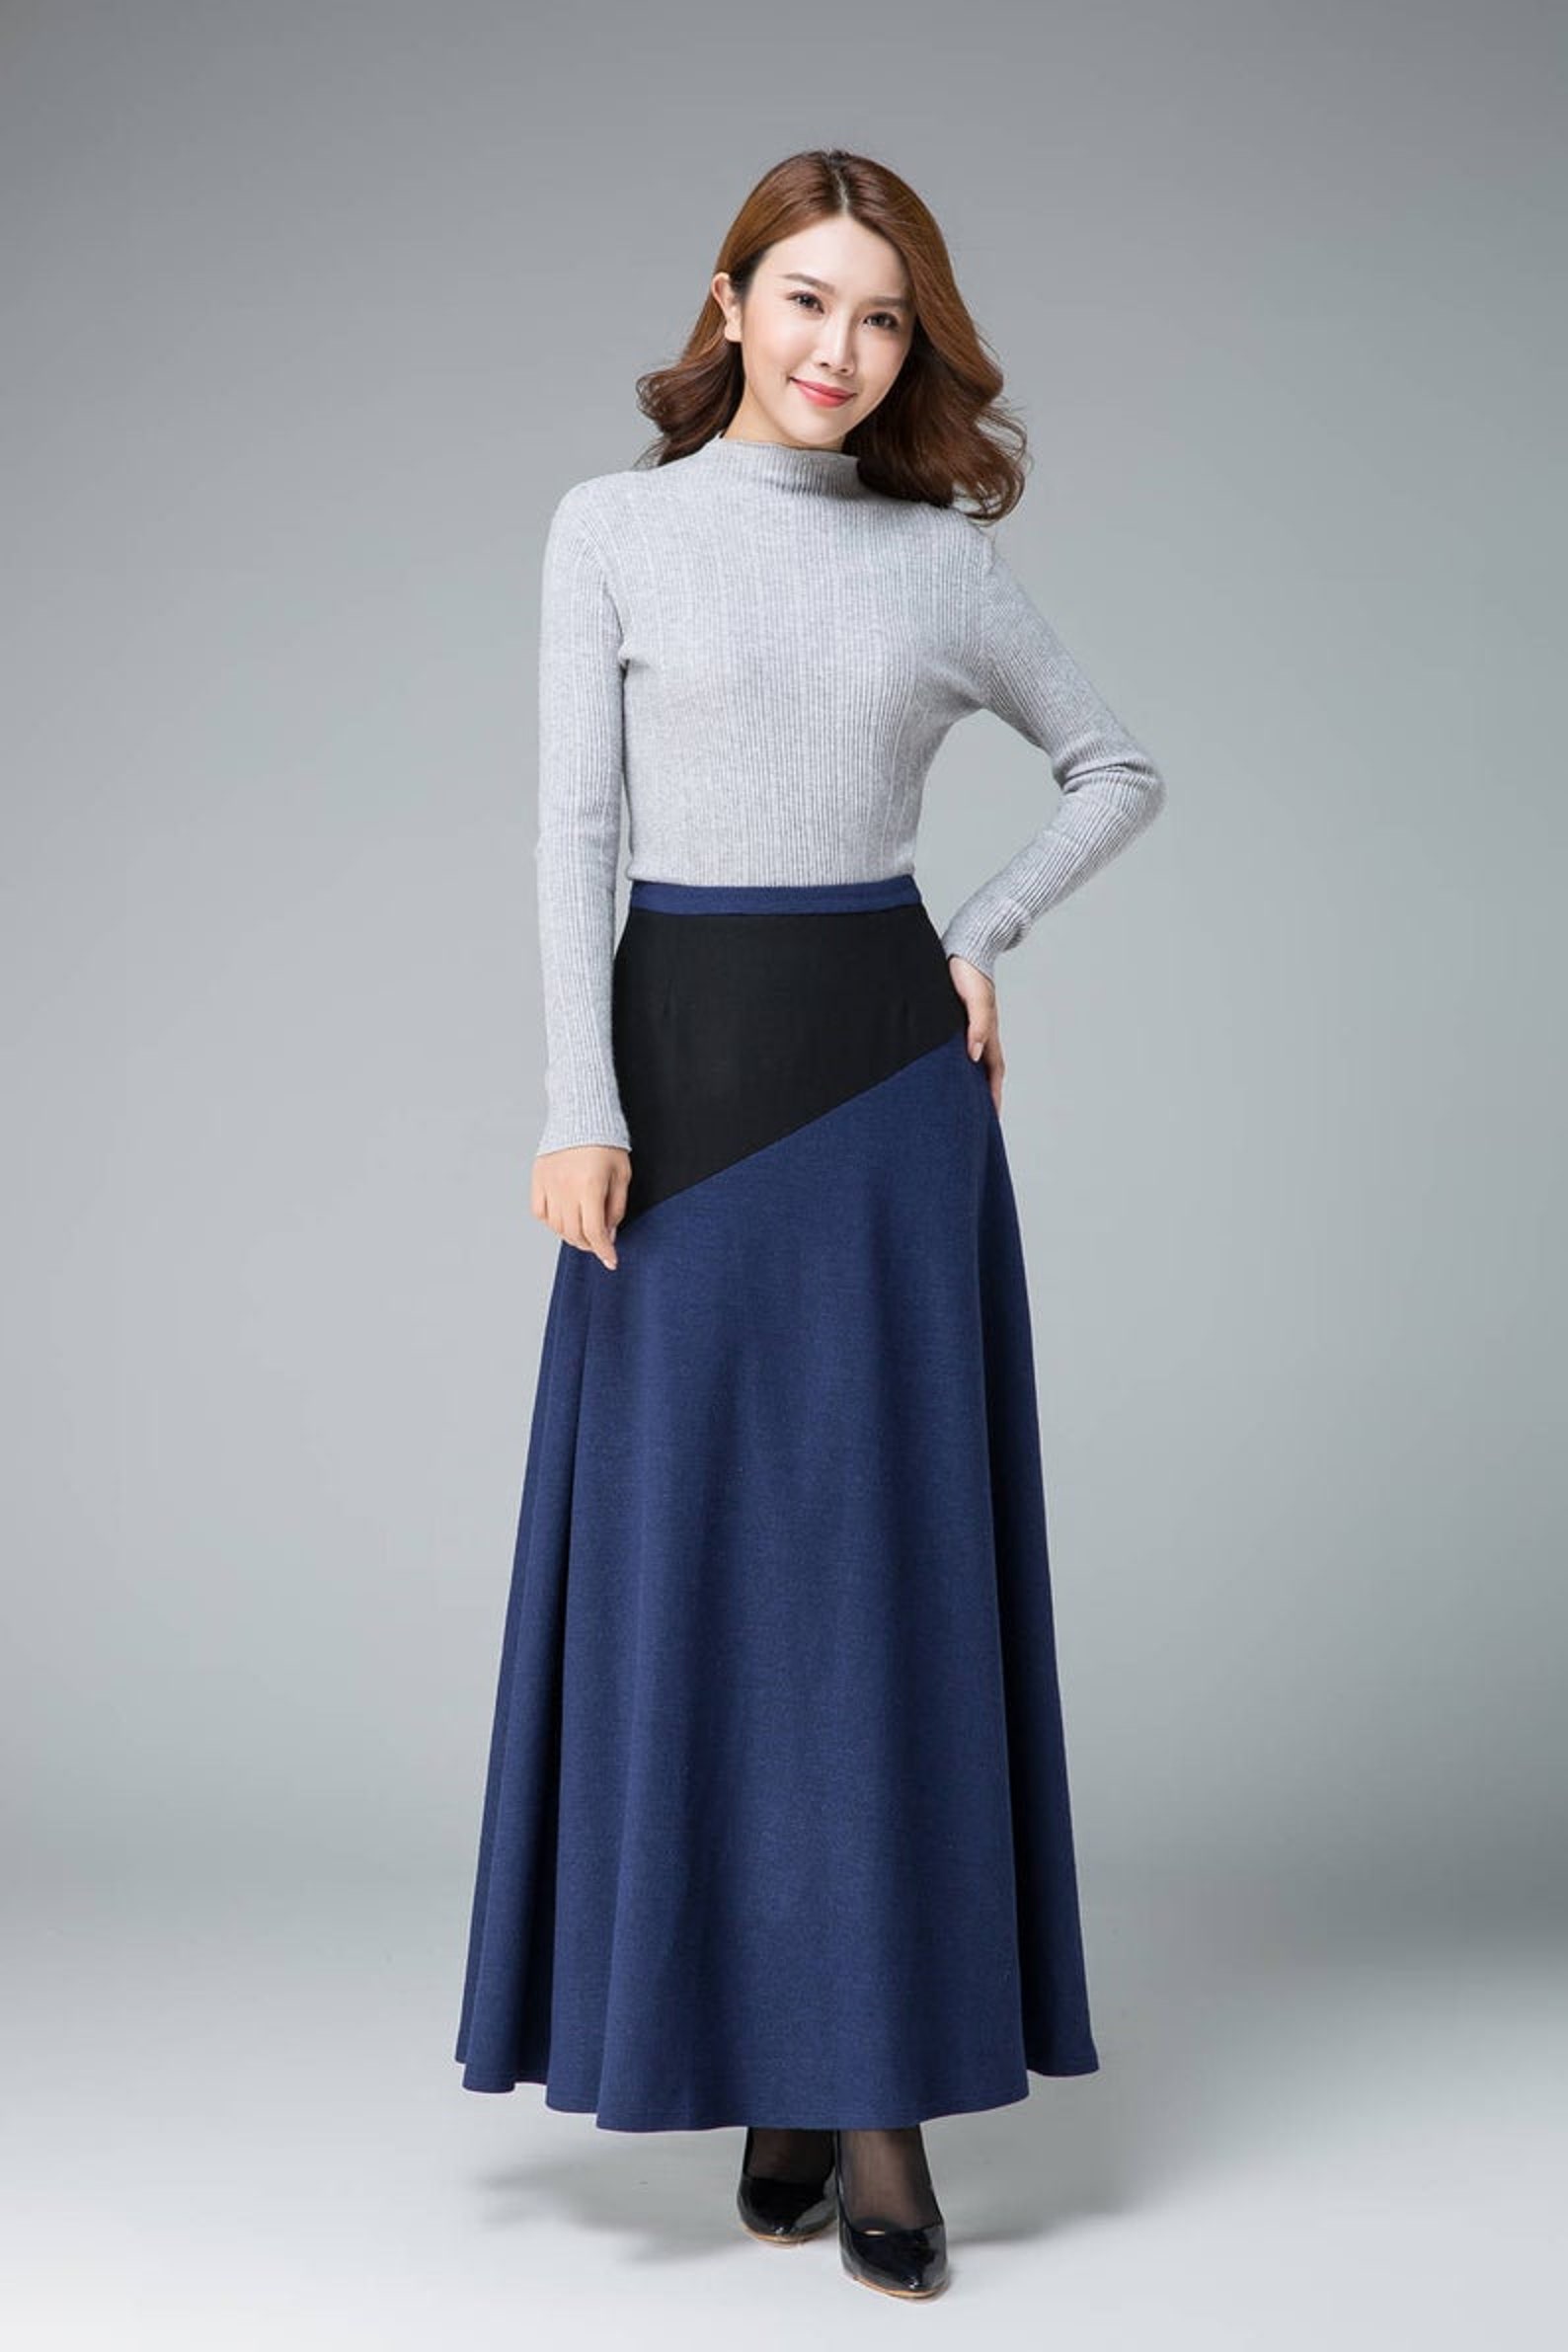 Grey Wool Skirt Wool Skirt Winter Skirts for Women A Line | Etsy